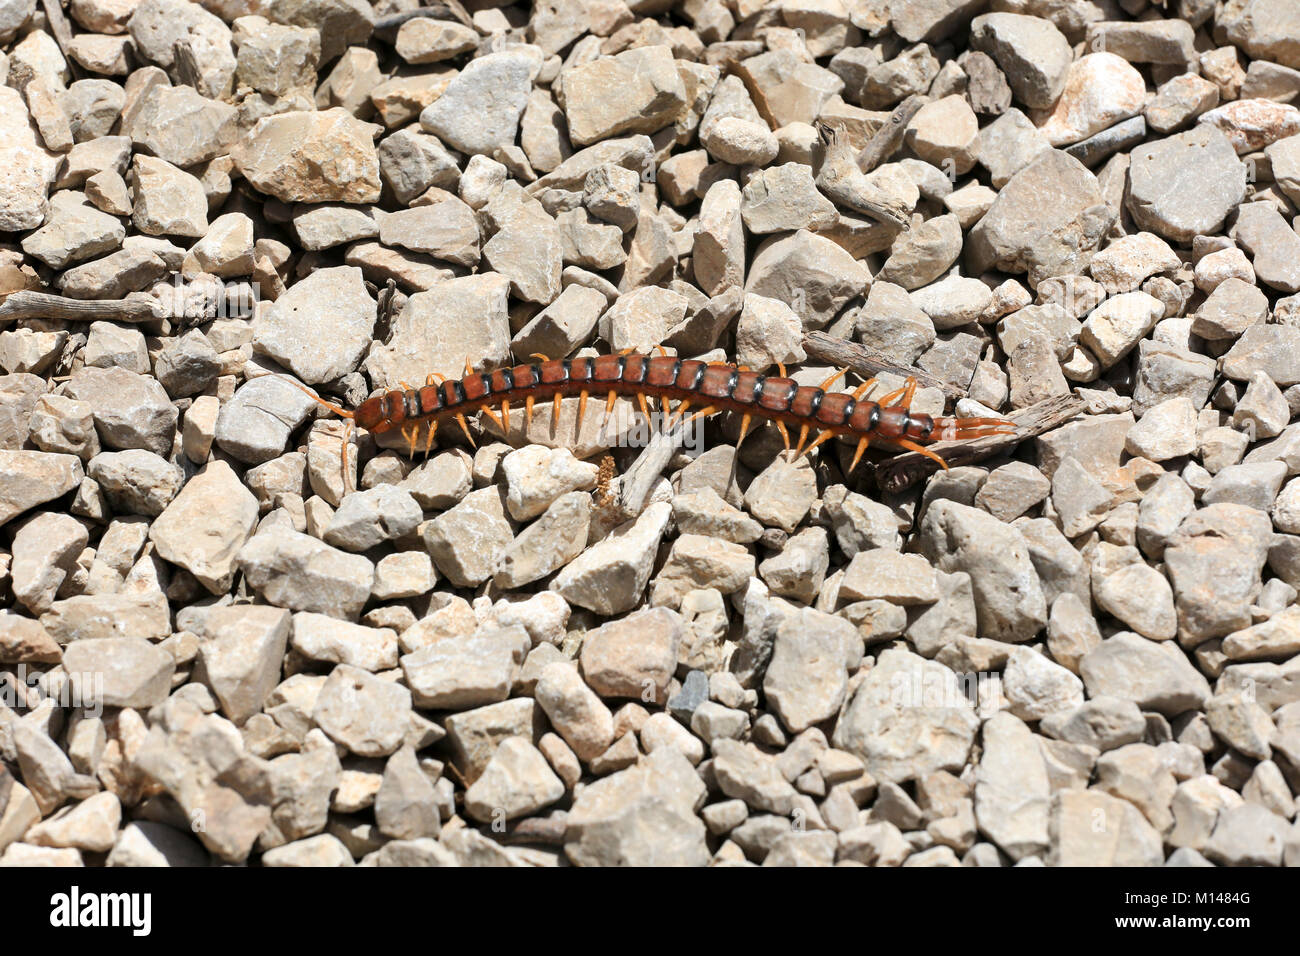 Centipede (Scolopendra sp.) on rocks Stock Photo